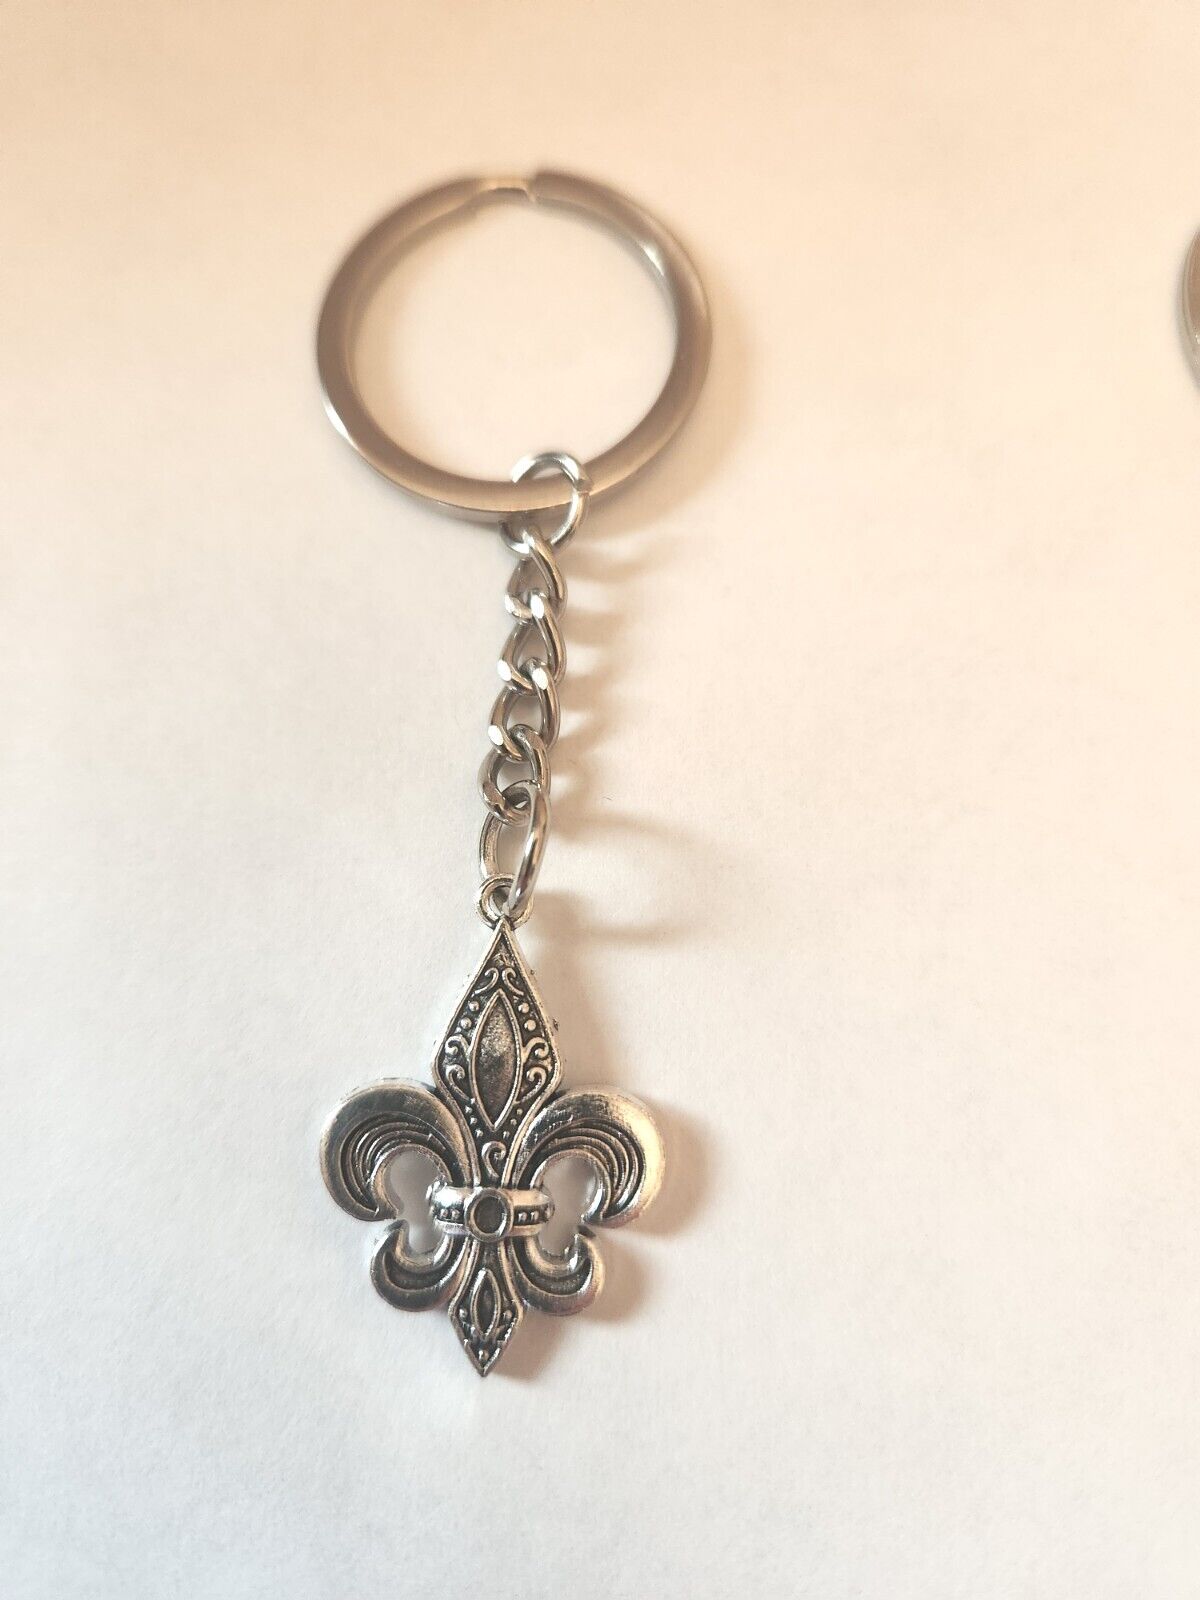 Fleur de Lis Ornate Metal Keychain w Keyring and Chain - Bookbag and Purse Pull